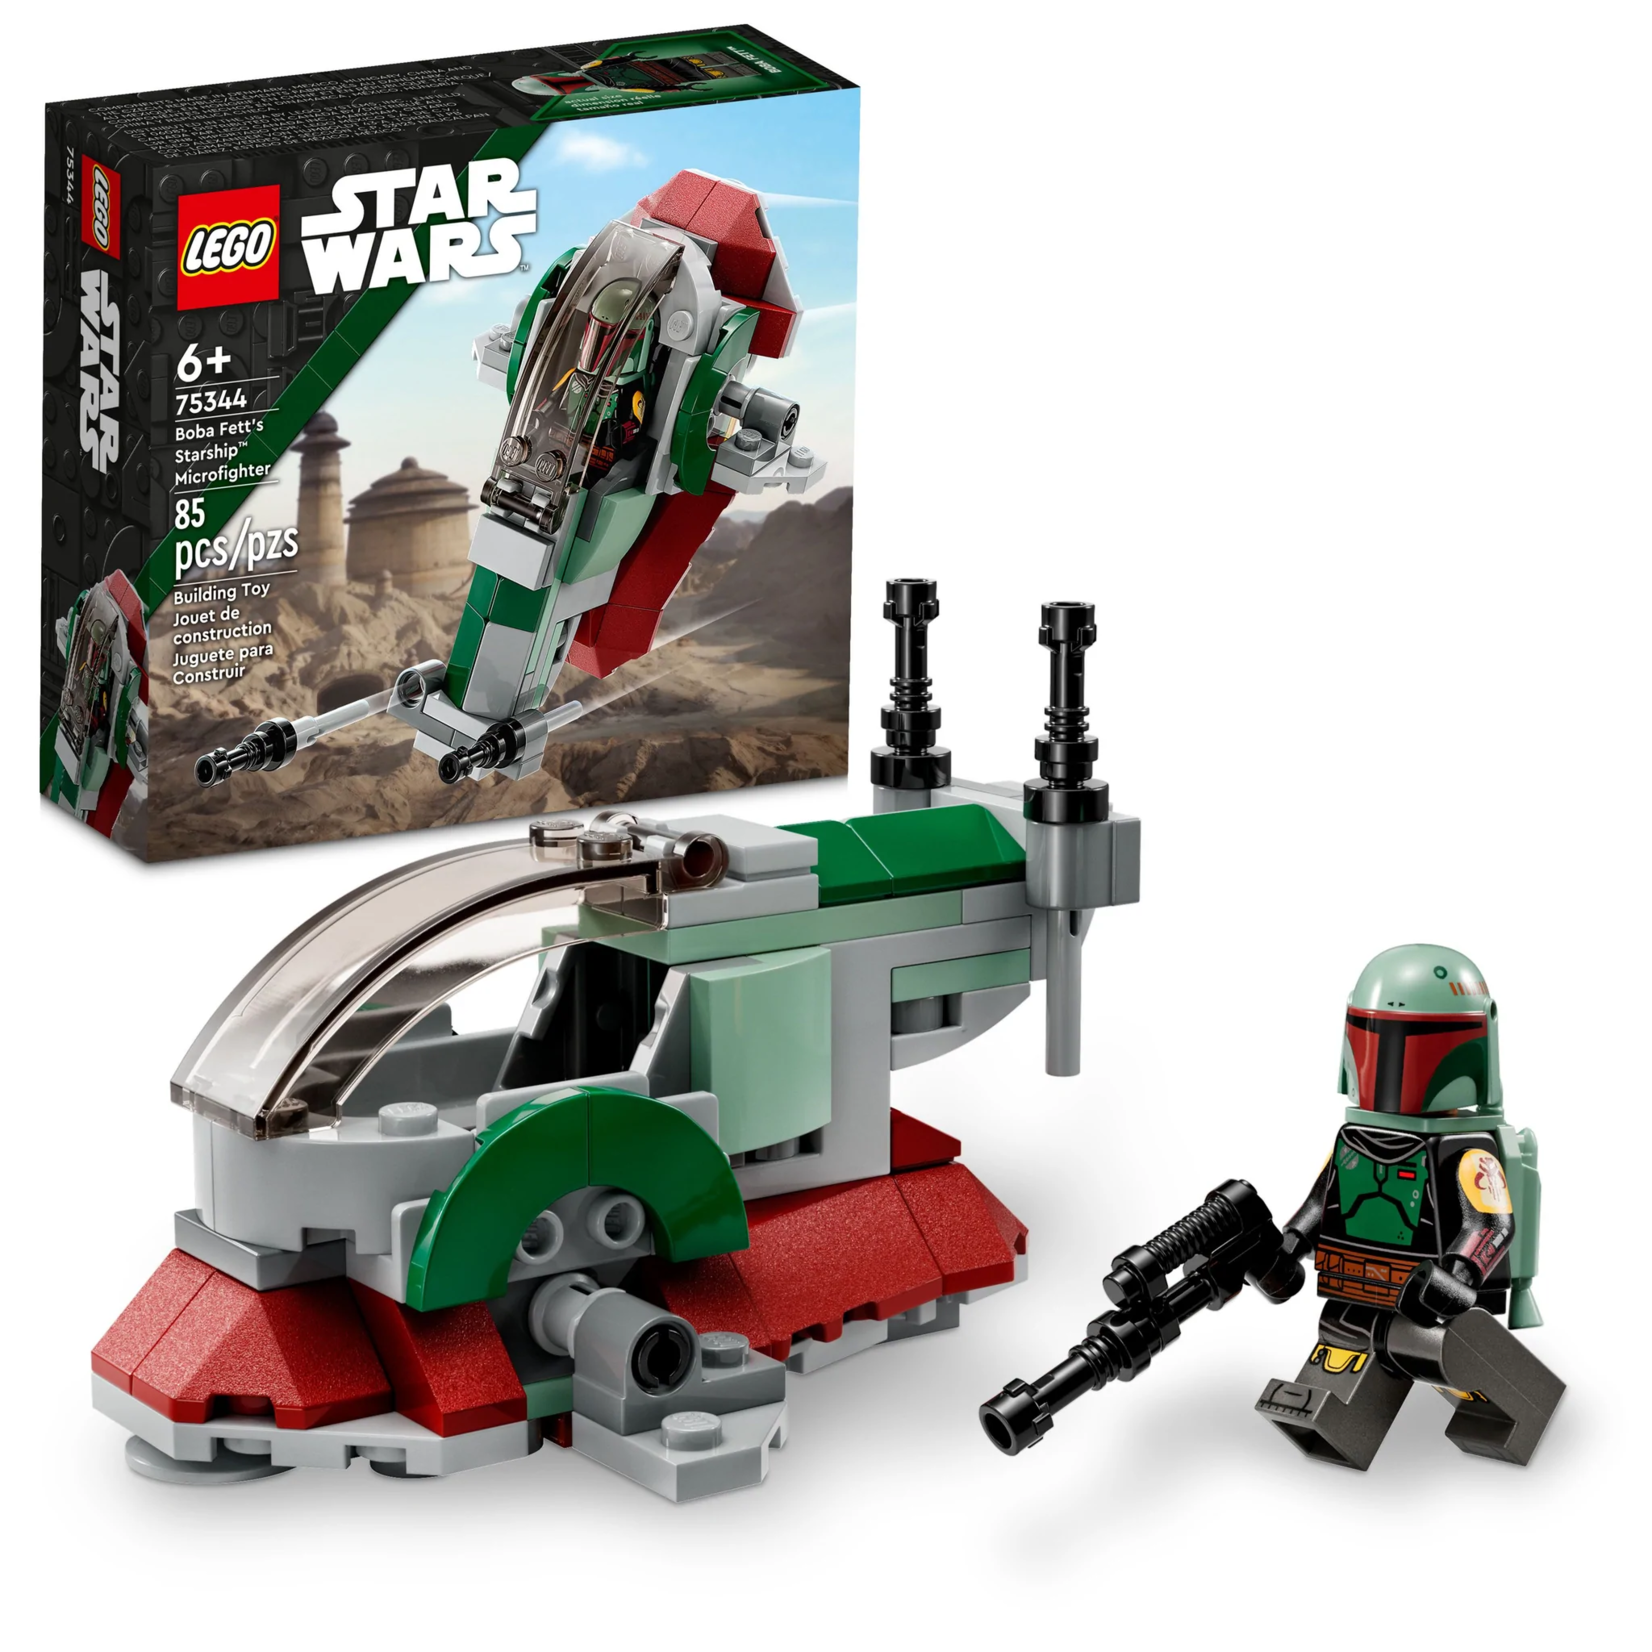 LEGO LEGO Star Wars Boba Fett's Starship™ Microfighter 75344